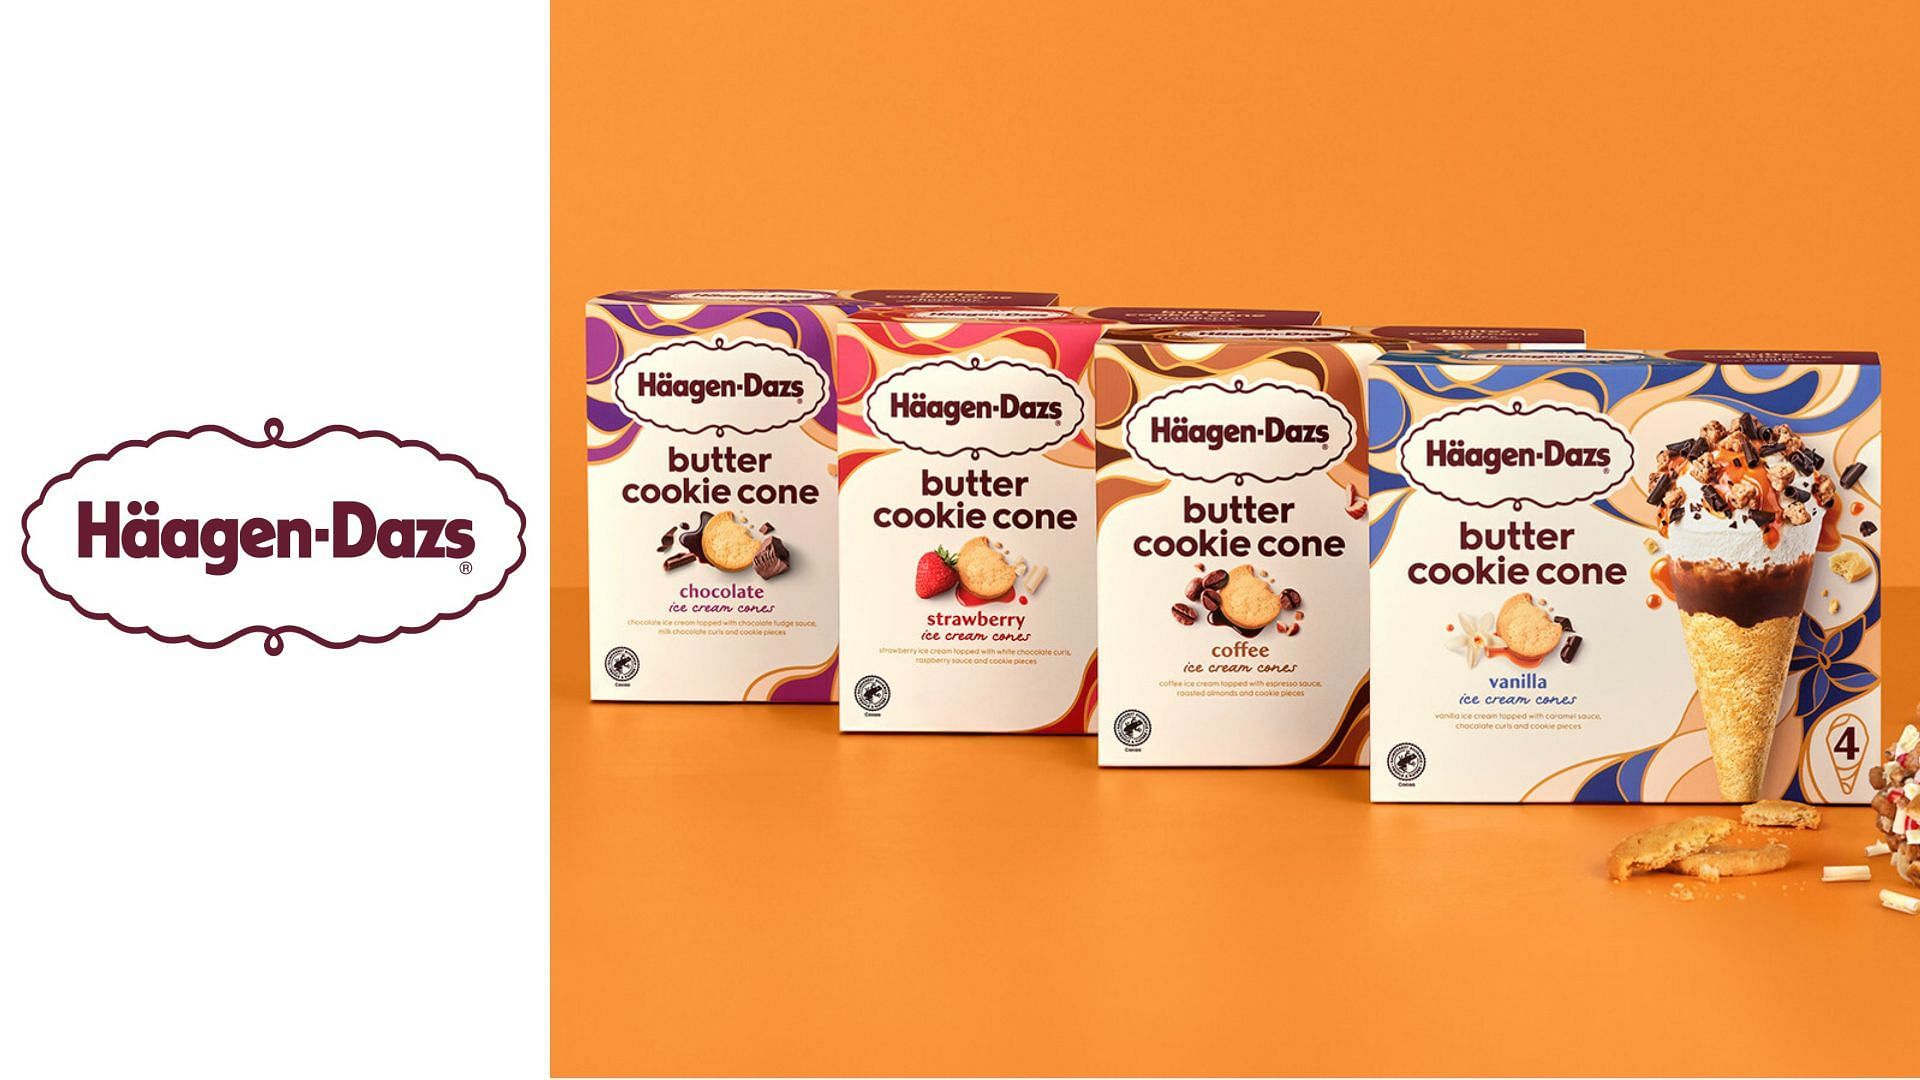 H&auml;agen-Dazs introduces all-new Butter Cookie Cones (Image via H&auml;agen-Dazs)